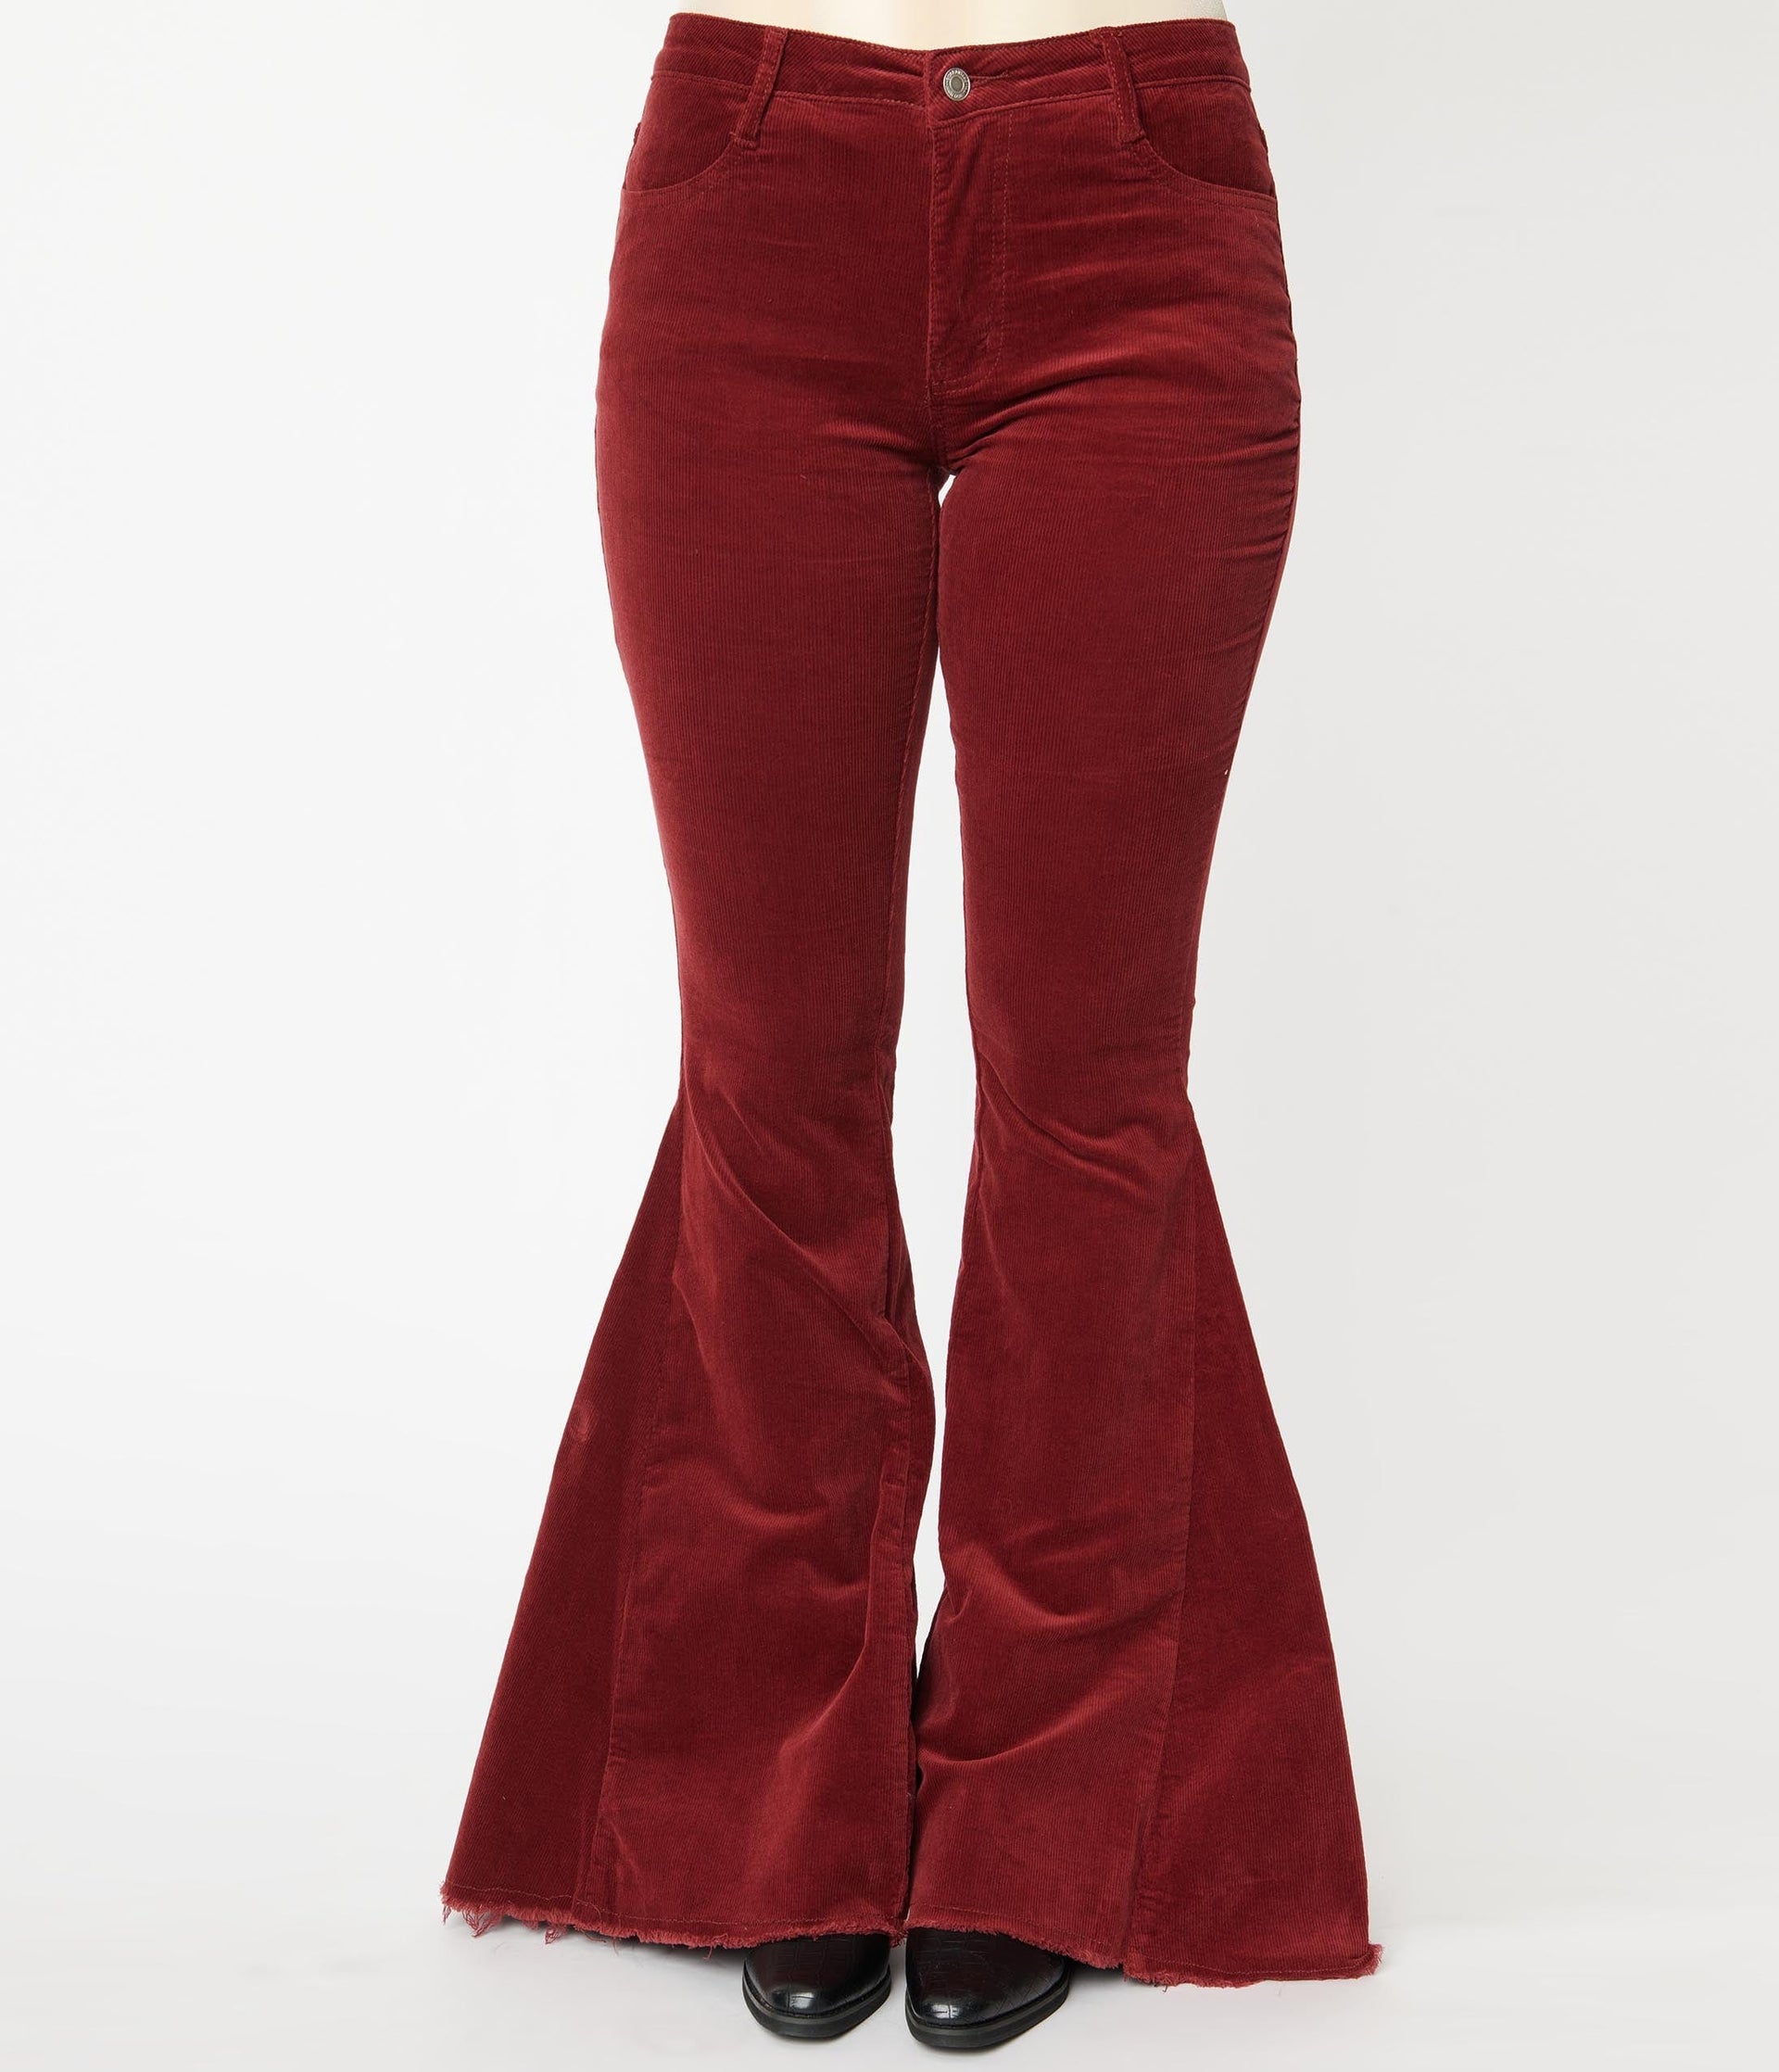 1970s corduroy pants, flare leg, vintage 70s pants, high waist